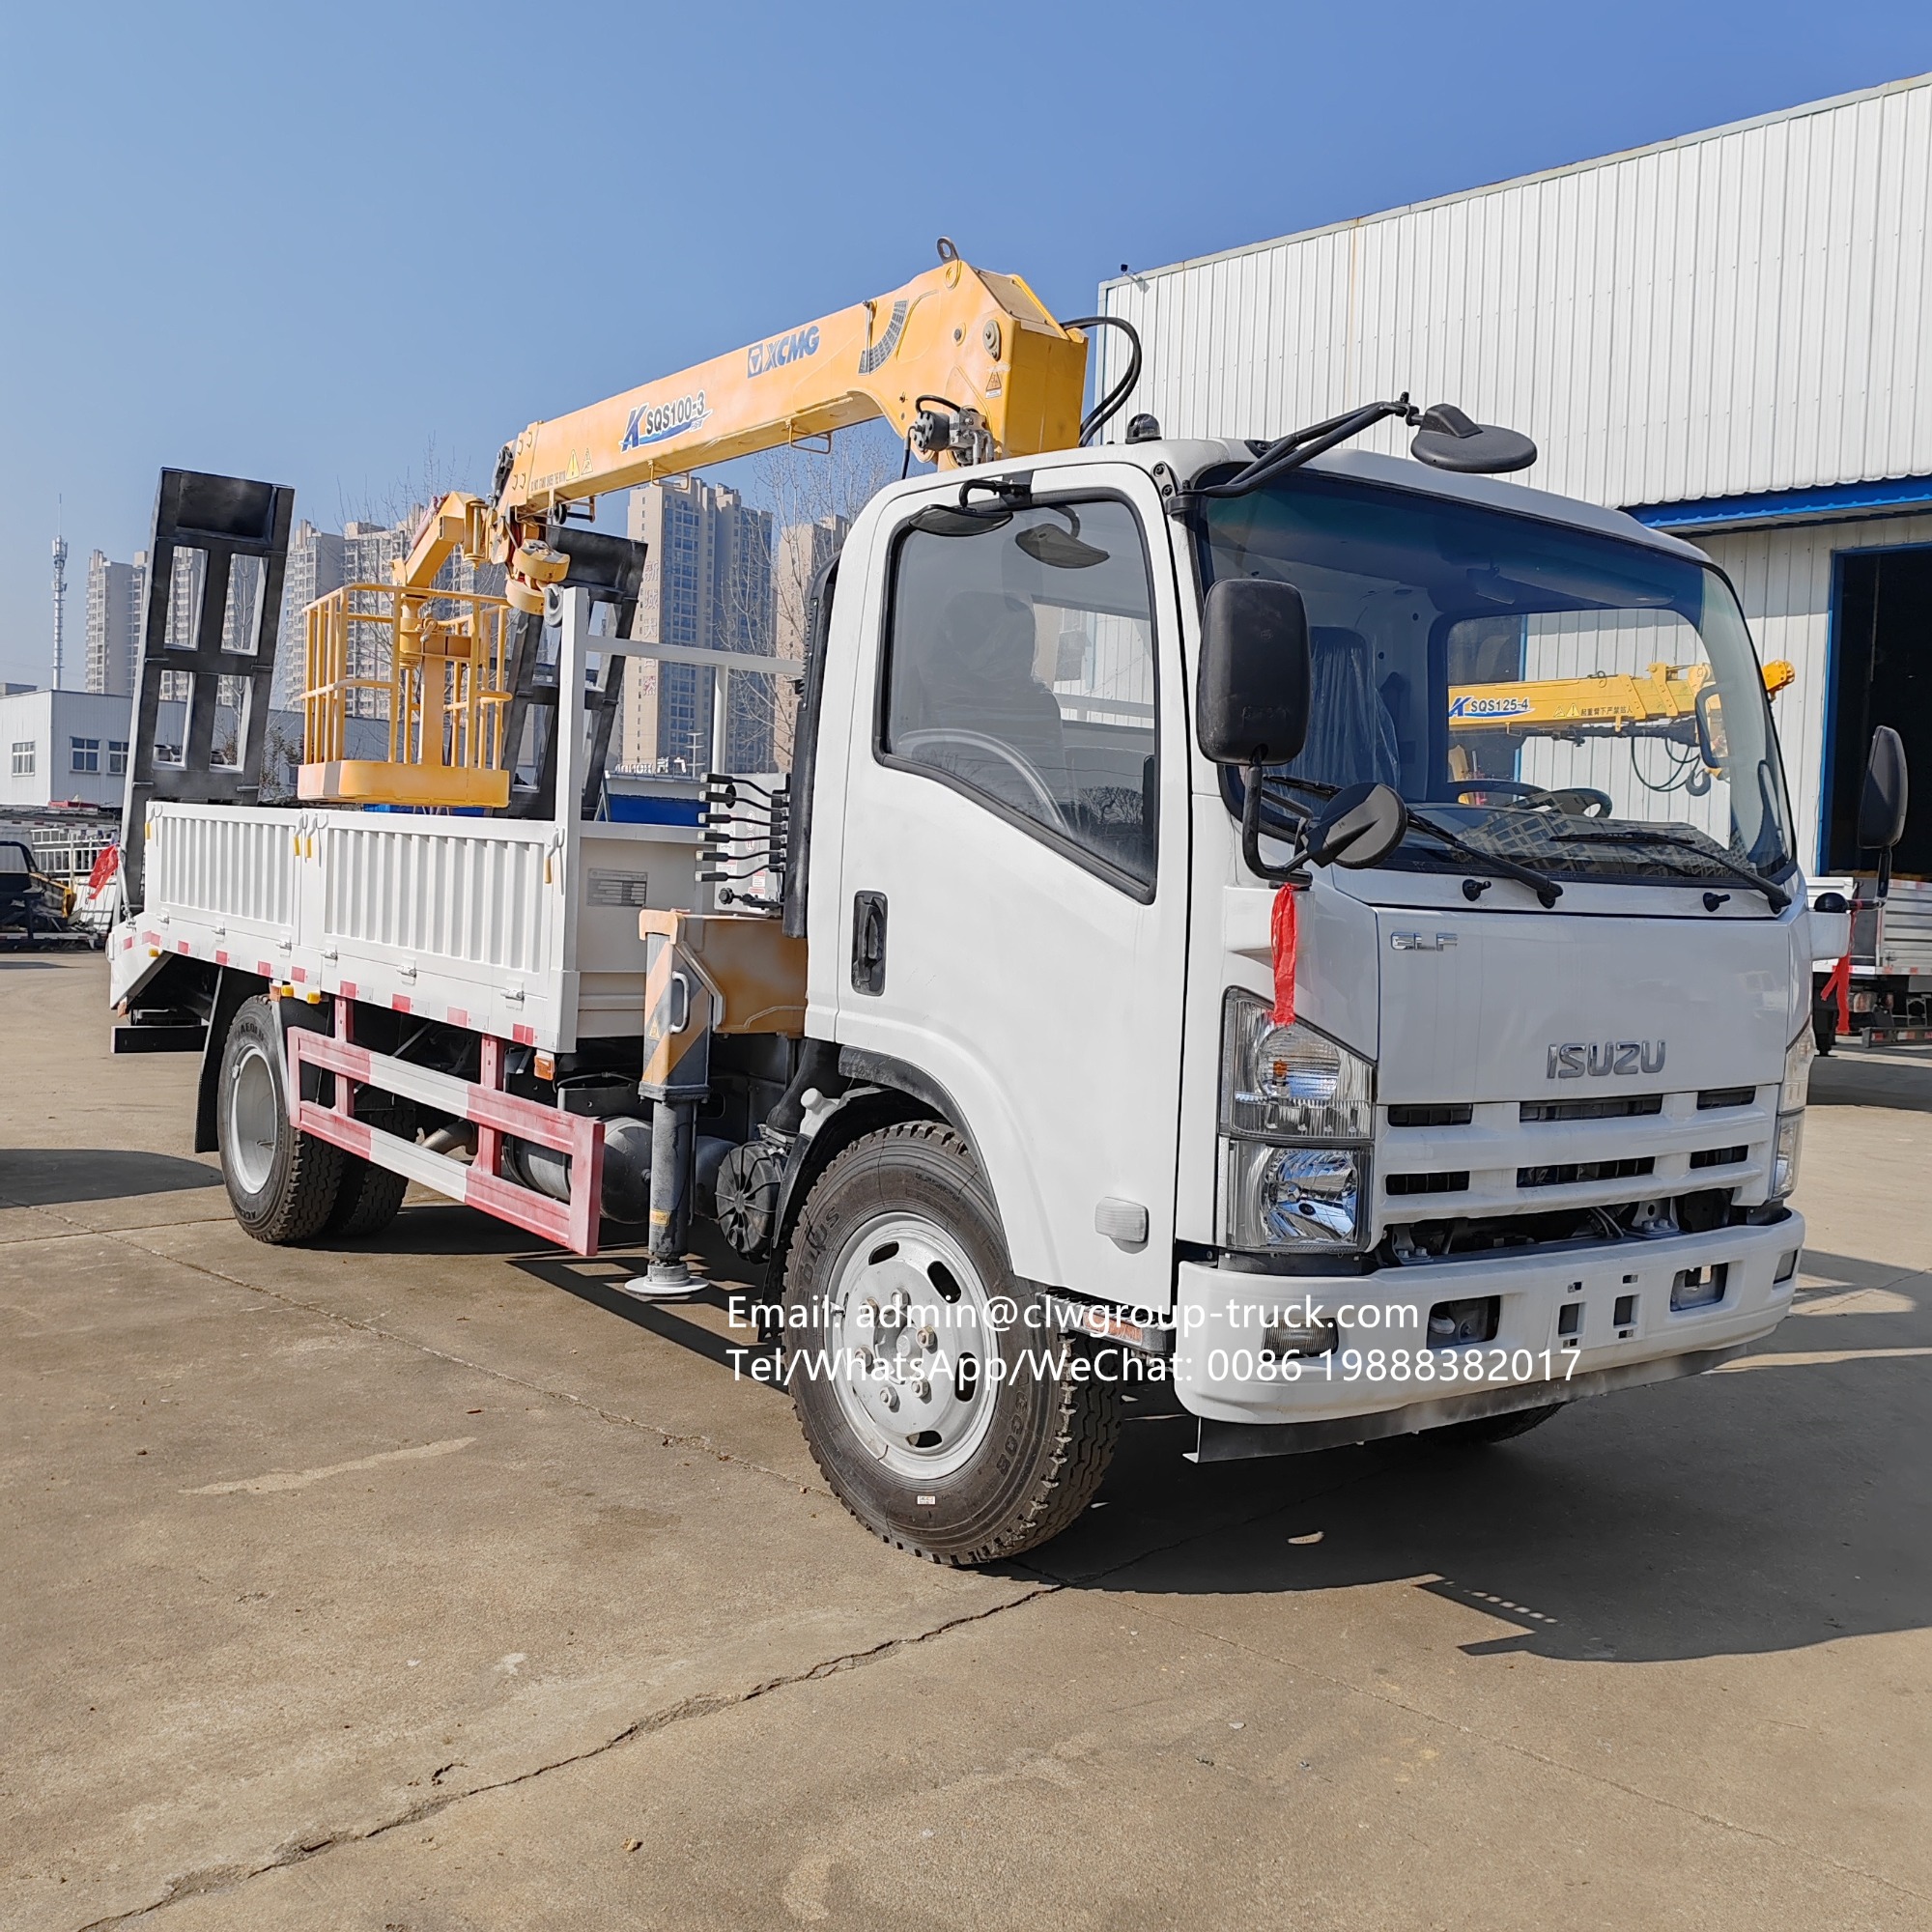 Isuzu small dump truck manipulator auger drill crane truck self loading truck with auger boom pole mounting truck